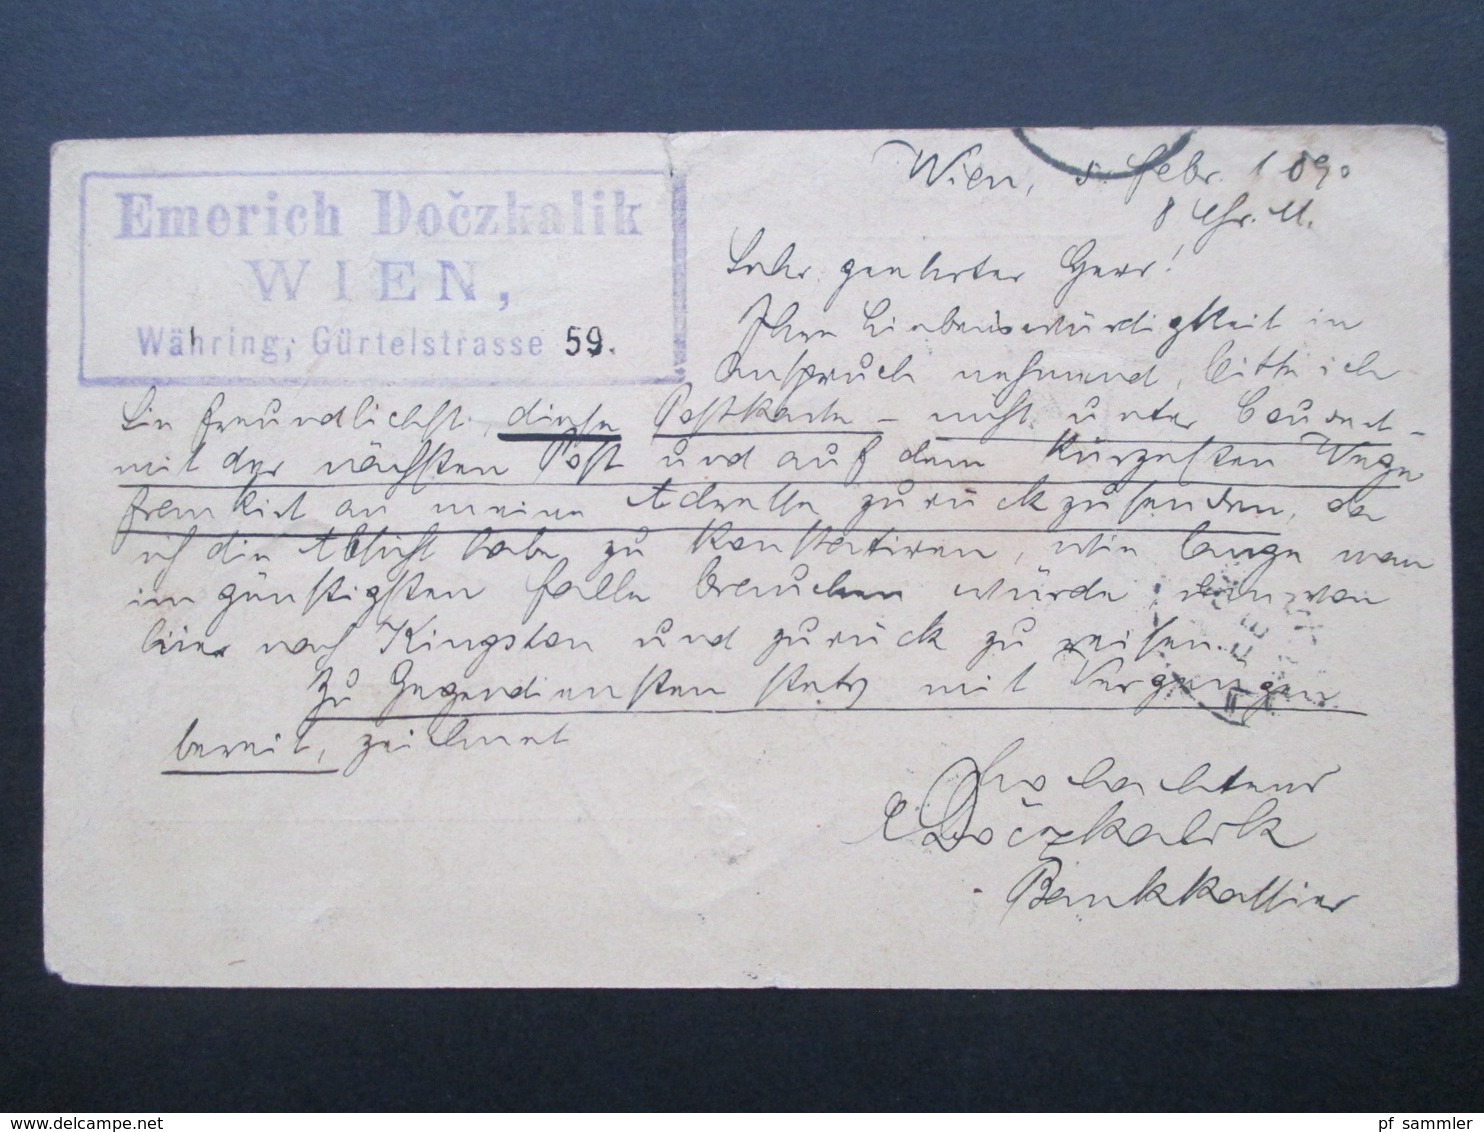 Österreich 1890 GA P 51 Weltvereinspostkarte nach Kingston Jamaica. 9 Stempel! Street letter box. returned letter branch